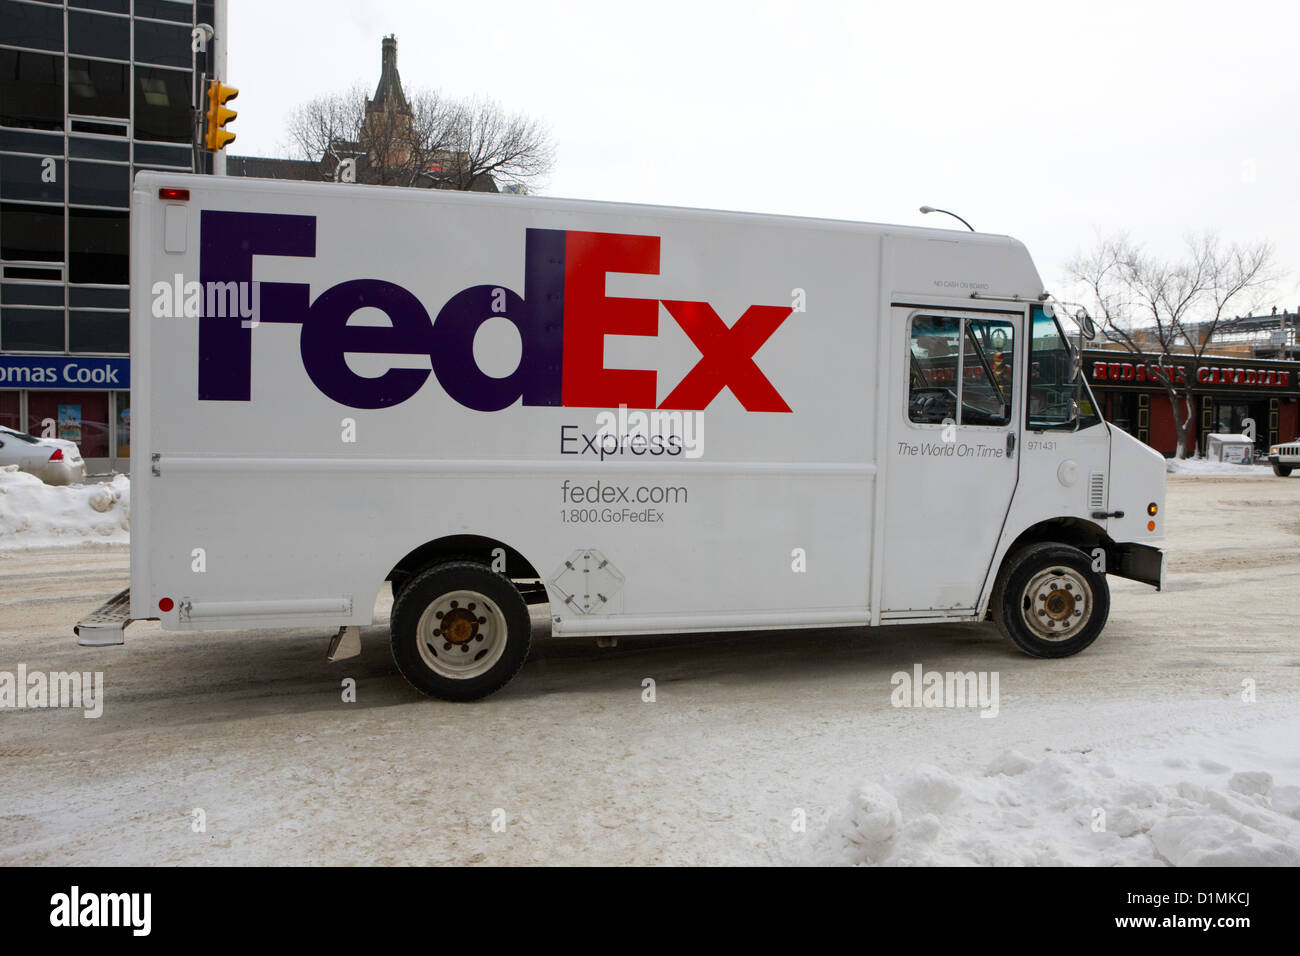 fedex express delivery truck in cold weather Saskatoon Saskatchewan Canada Stock Photo